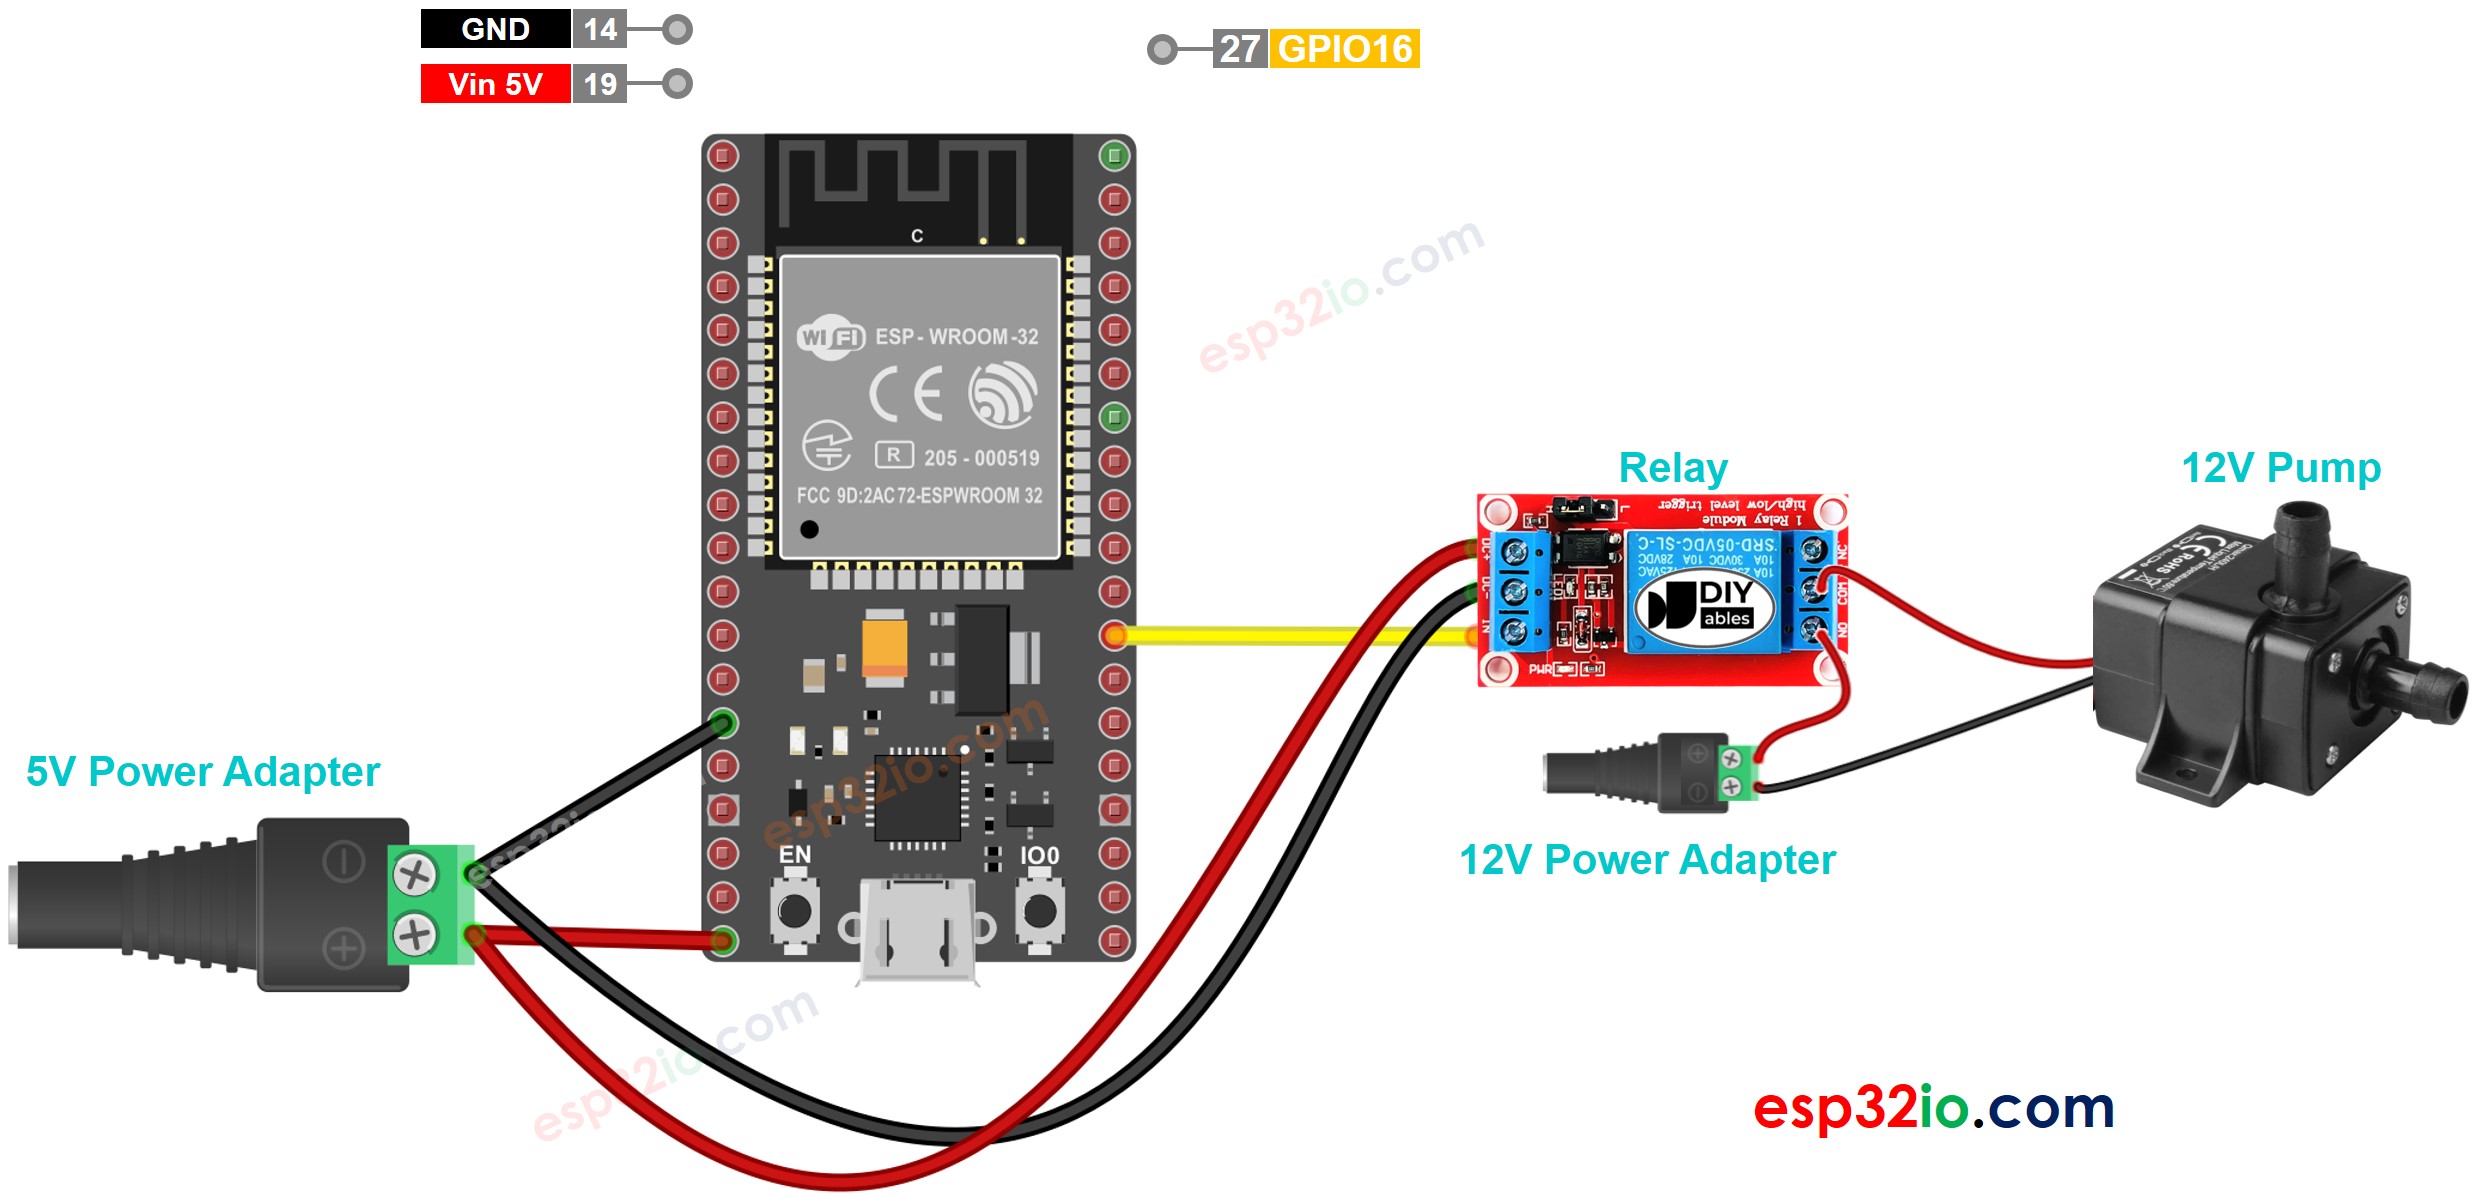 wiring diagram between esp32 pump